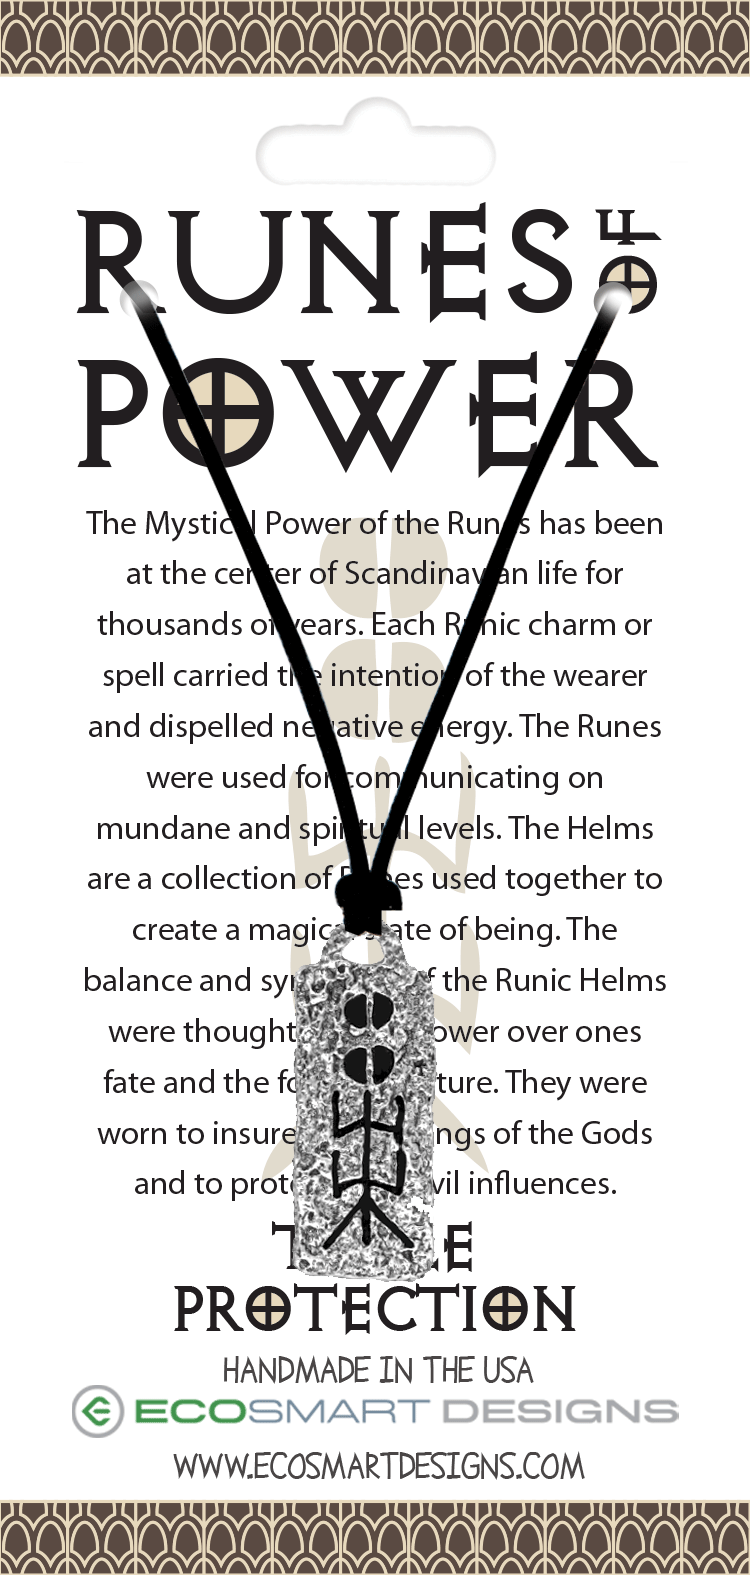 Runes of Power Protection, Power, Plenty Charm Amulet